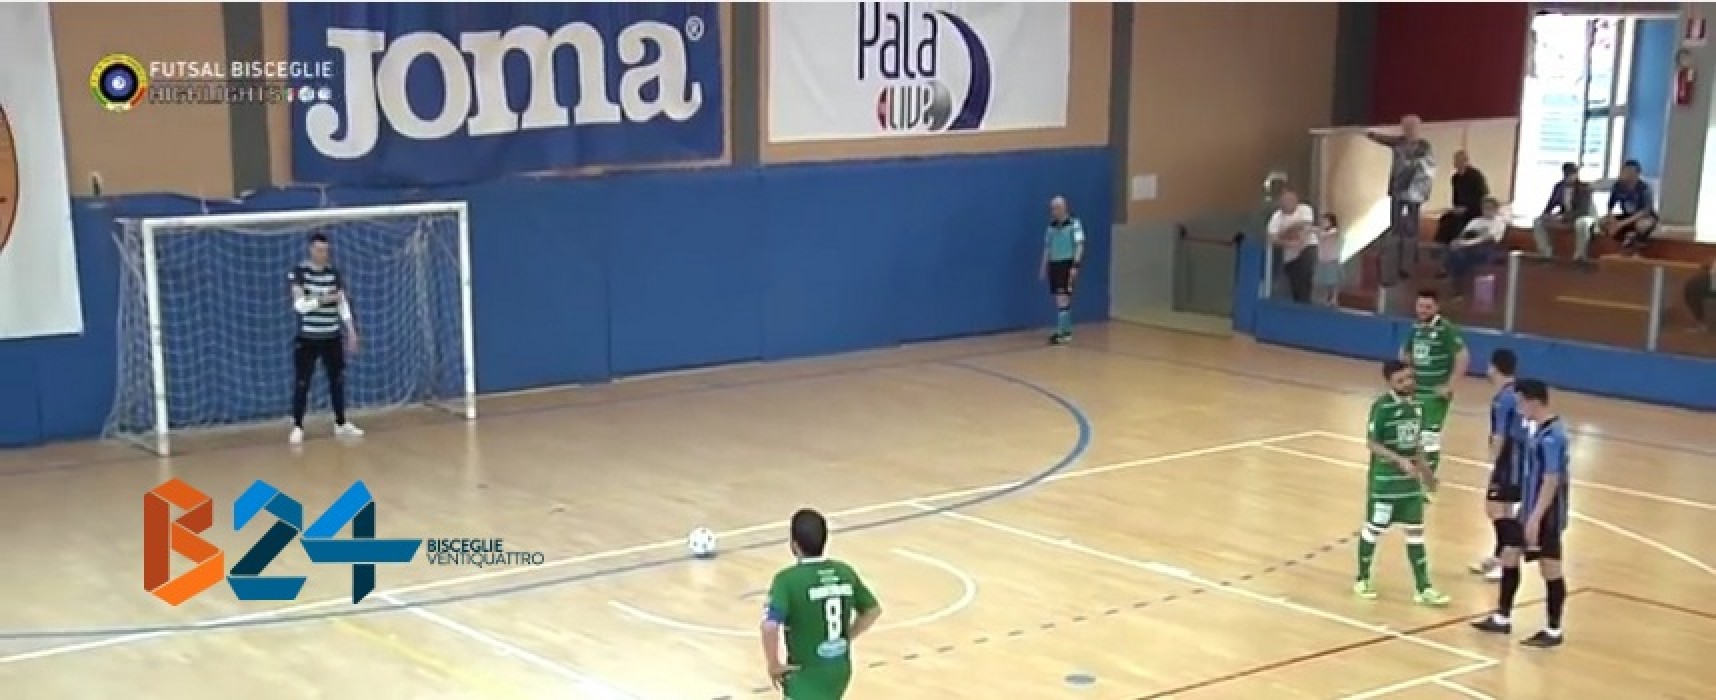 Futsal Isola-Futsal Bisceglie 3-4 / VIDEO HIGHLIGHTS